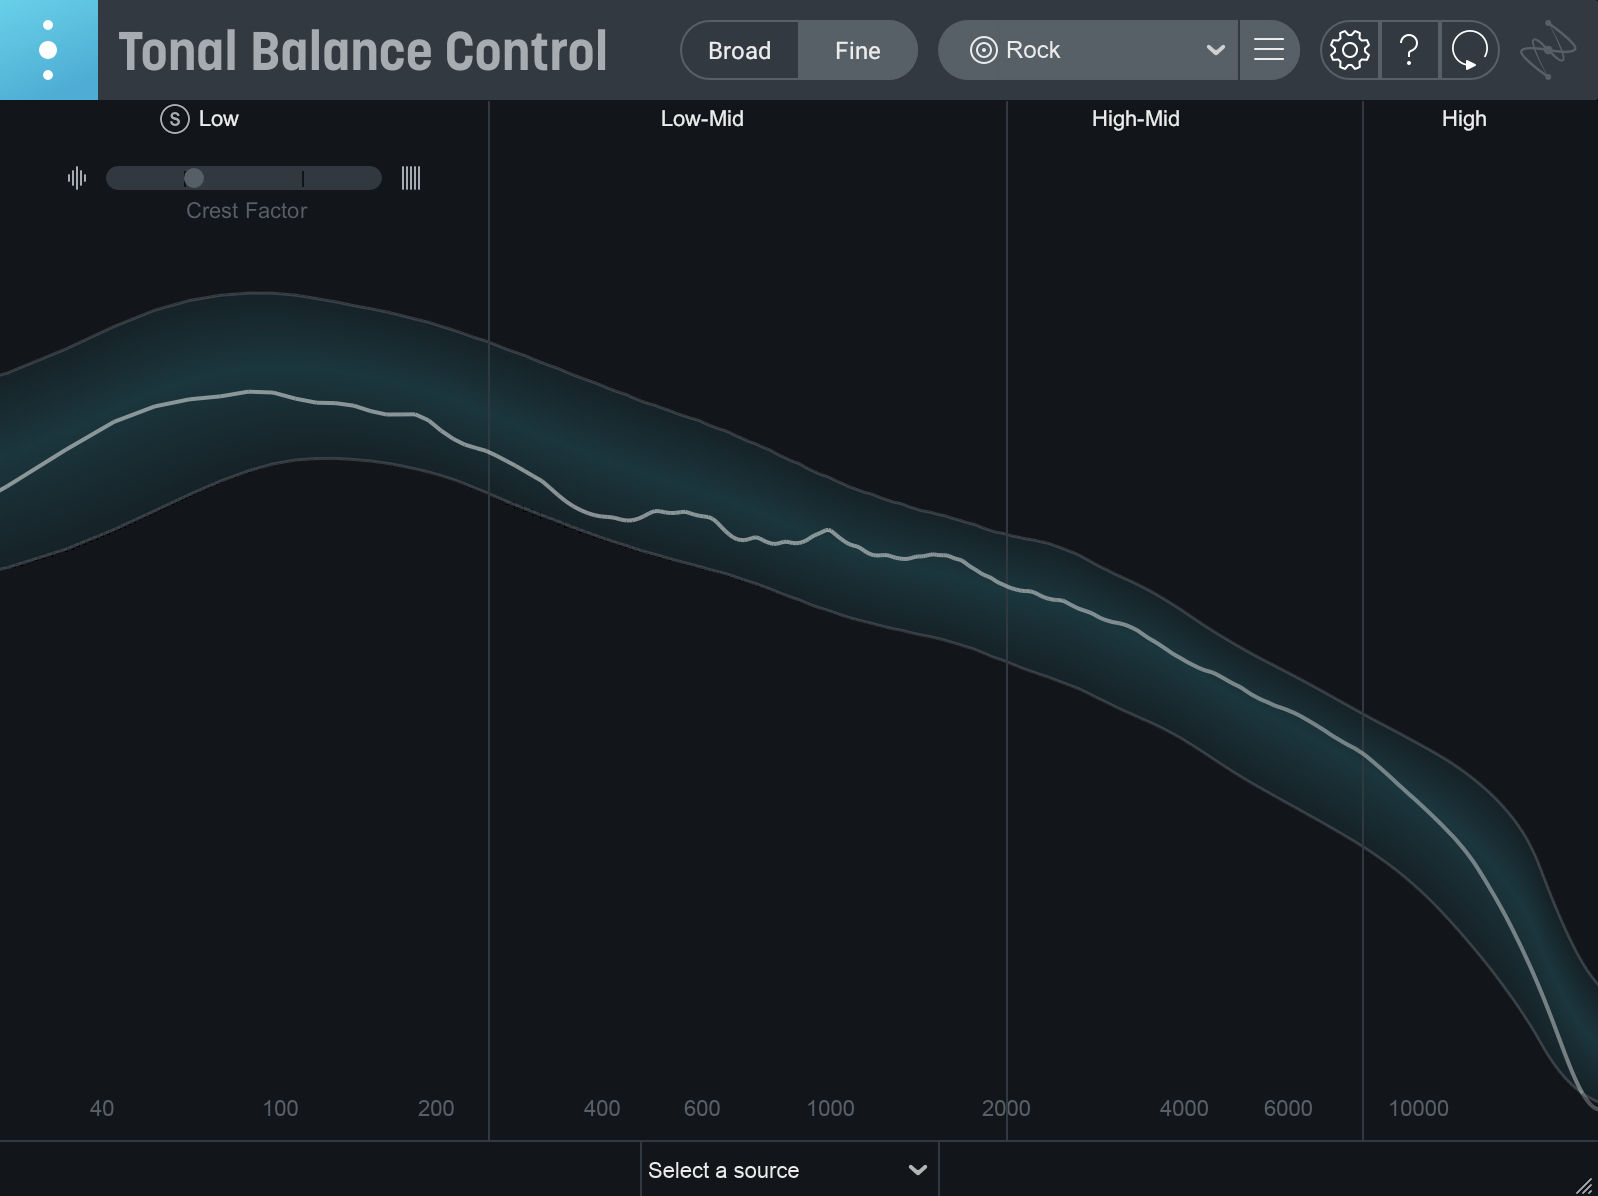 iZotope Tonal Balance Control 2.7.0 downloading